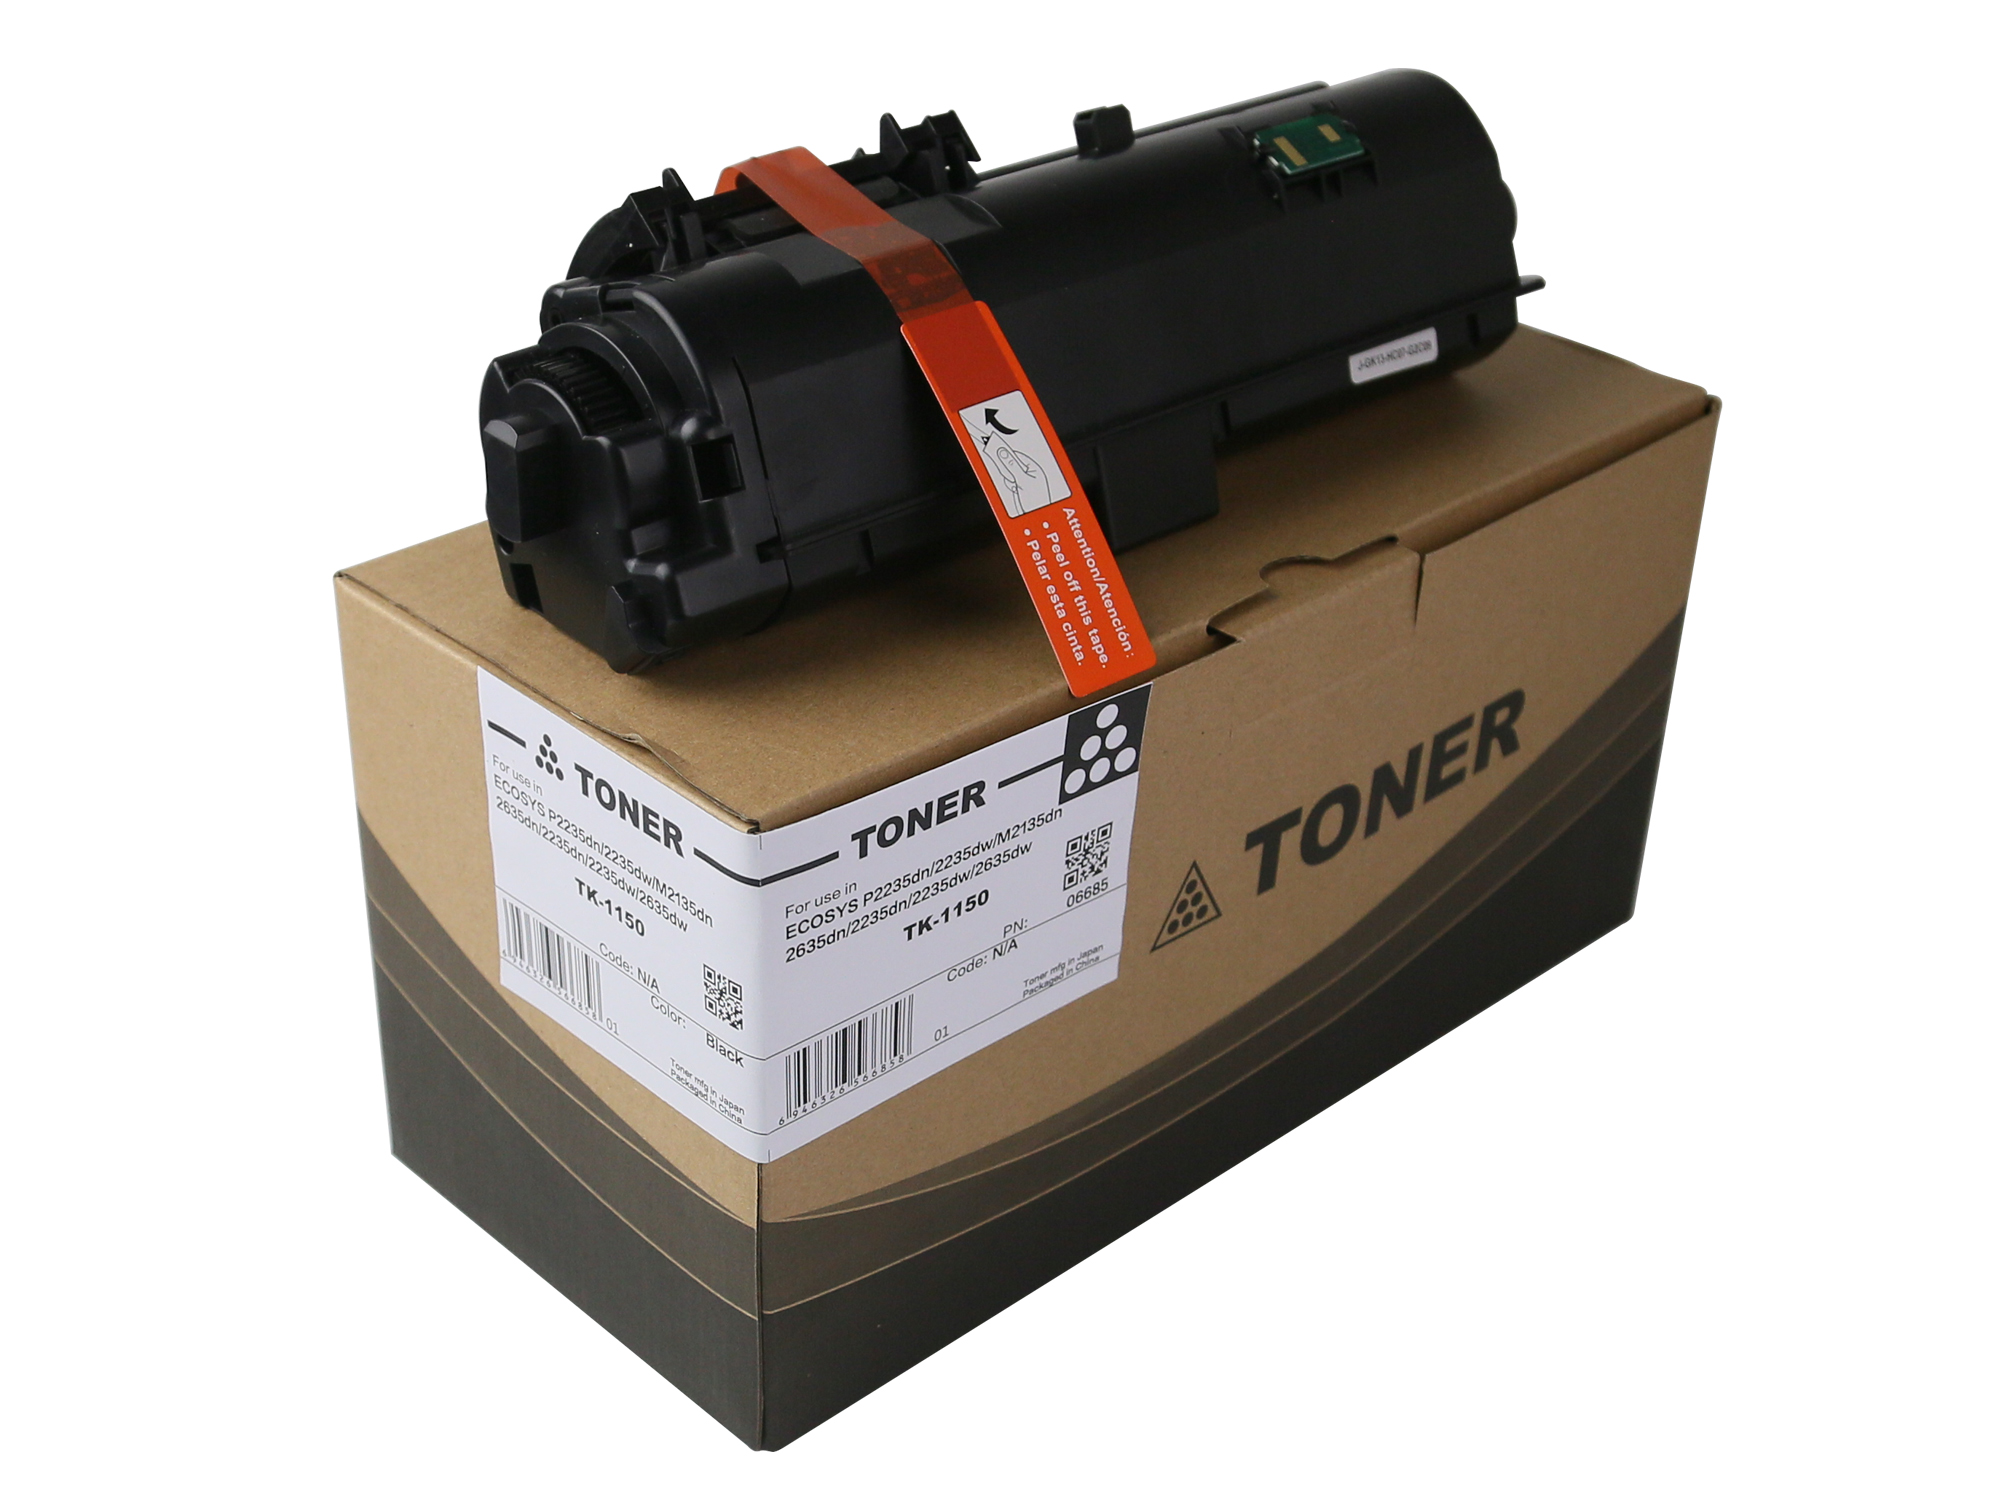 TK-1150 Toner Cartridge for Kyocera ECOSYS M2135dn